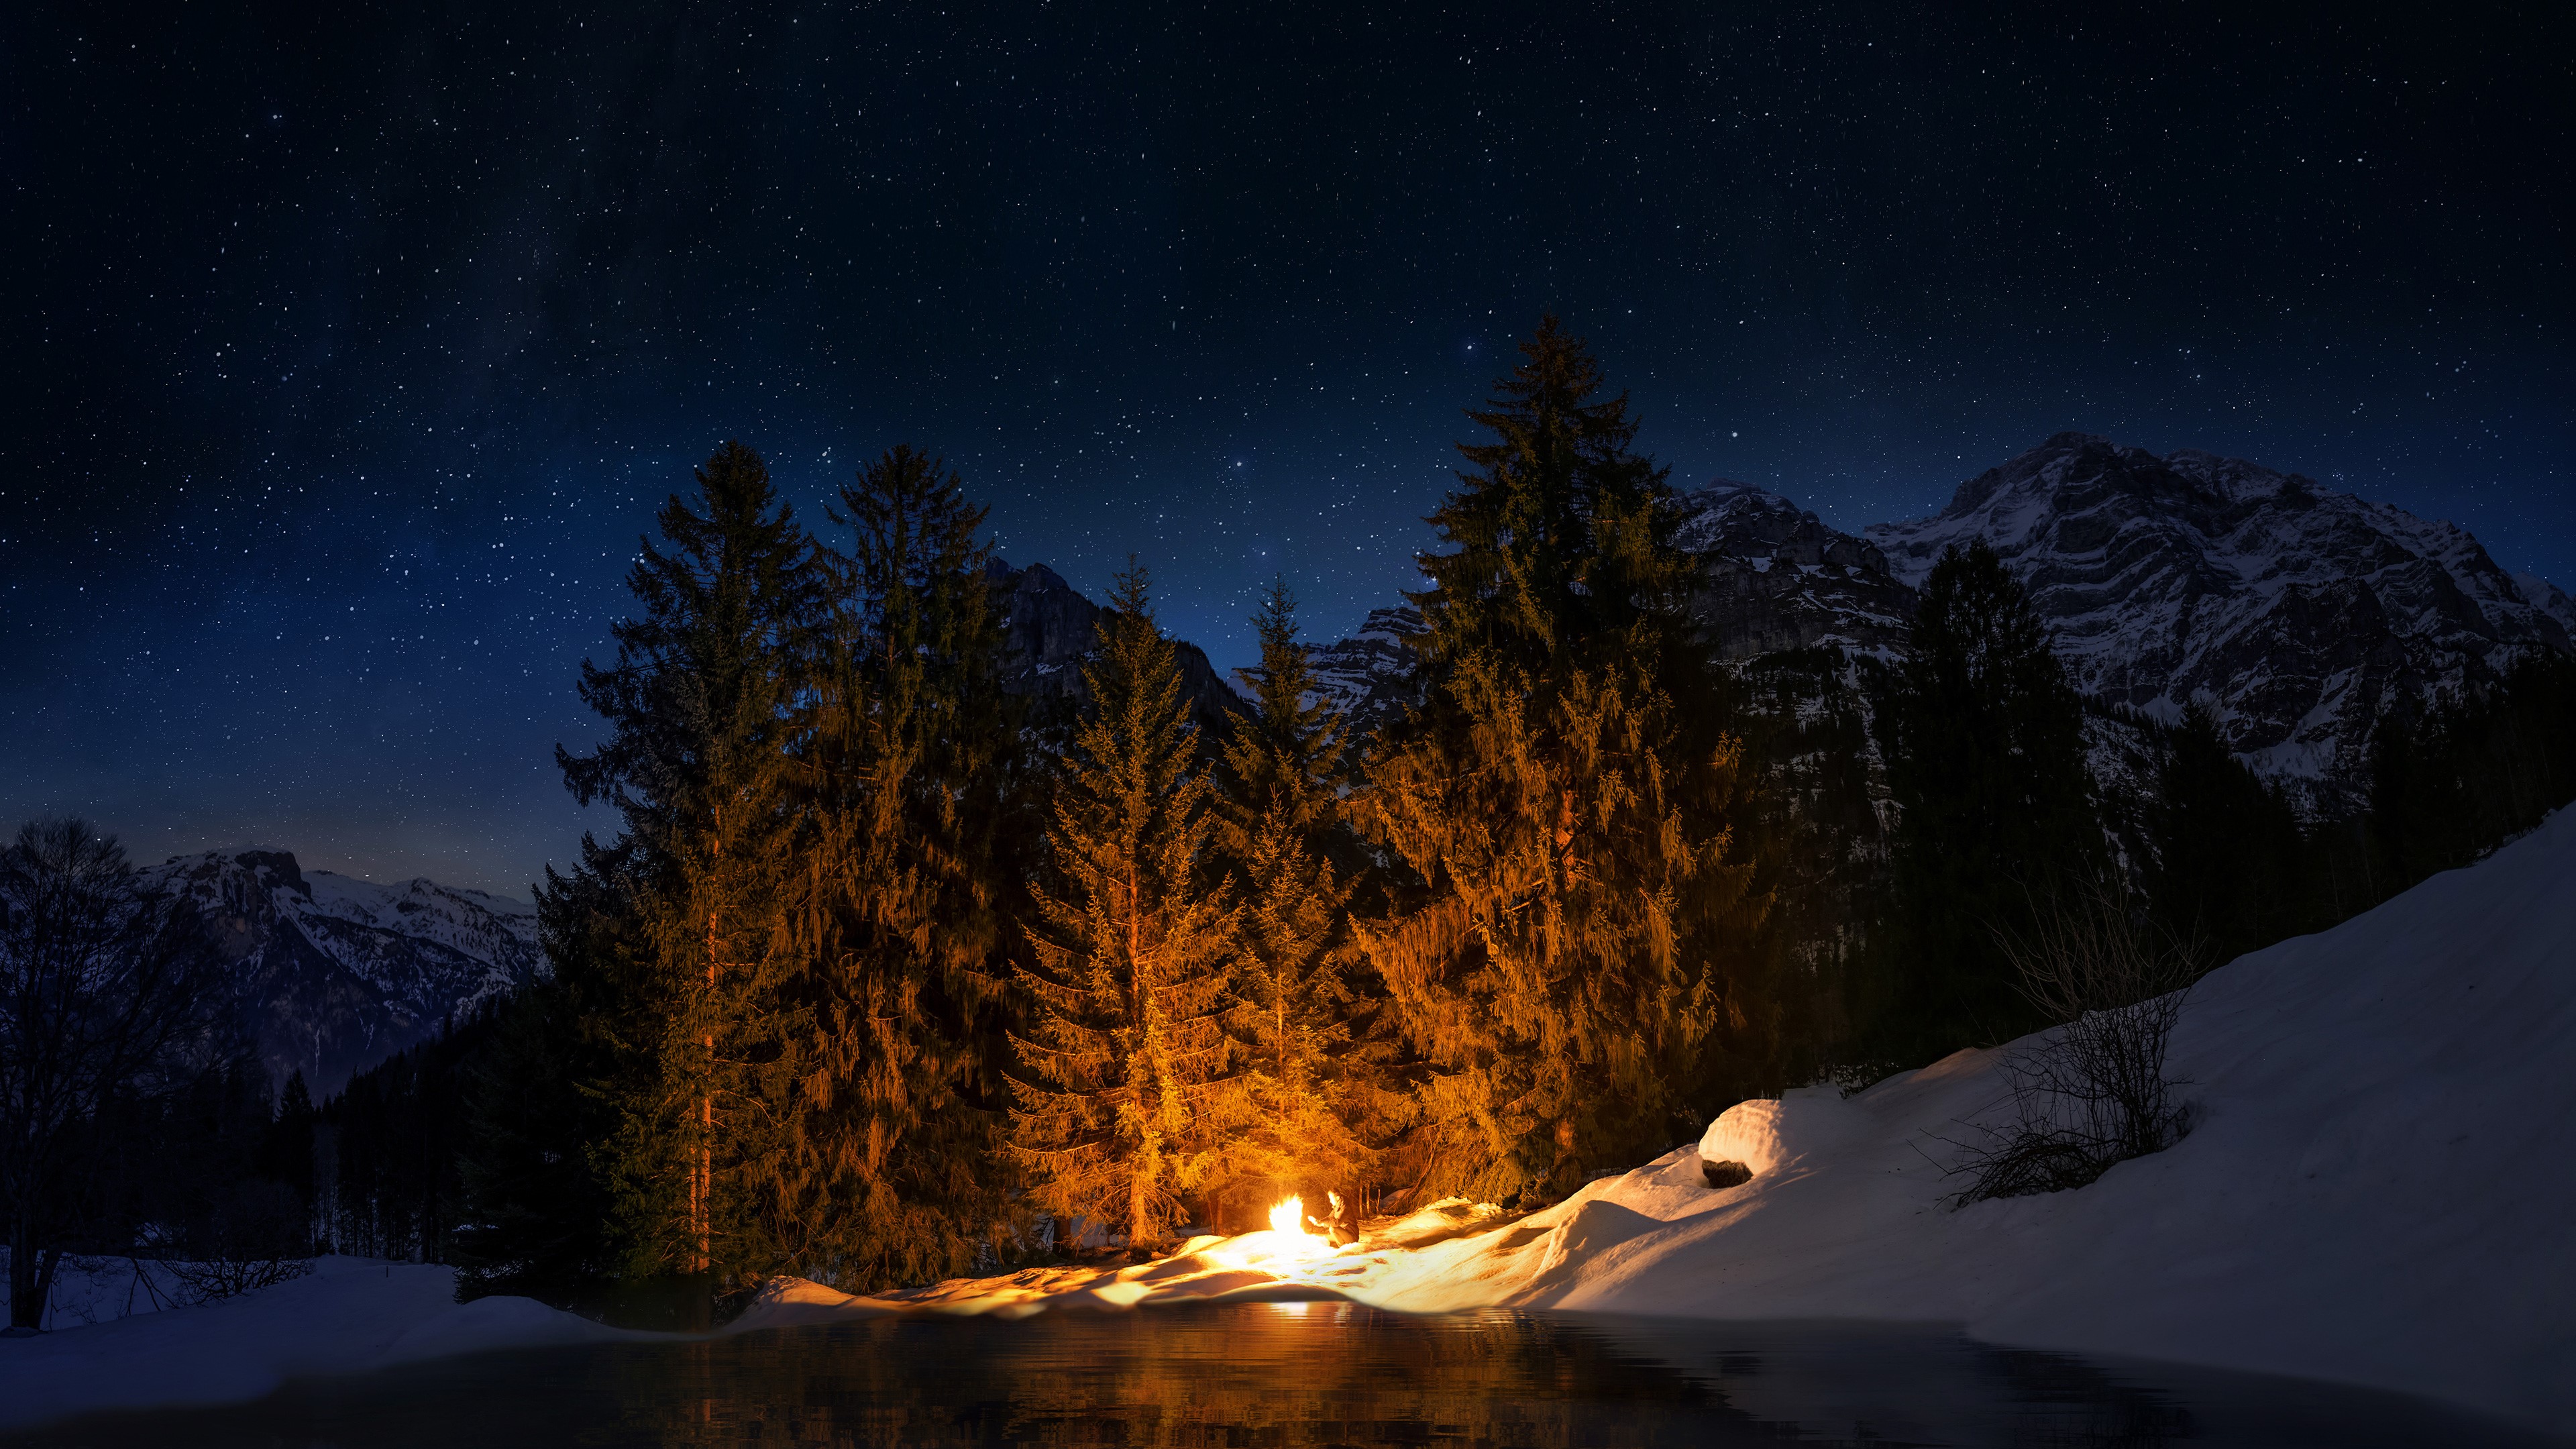 Full HD 1080p campfire wallpaper free download